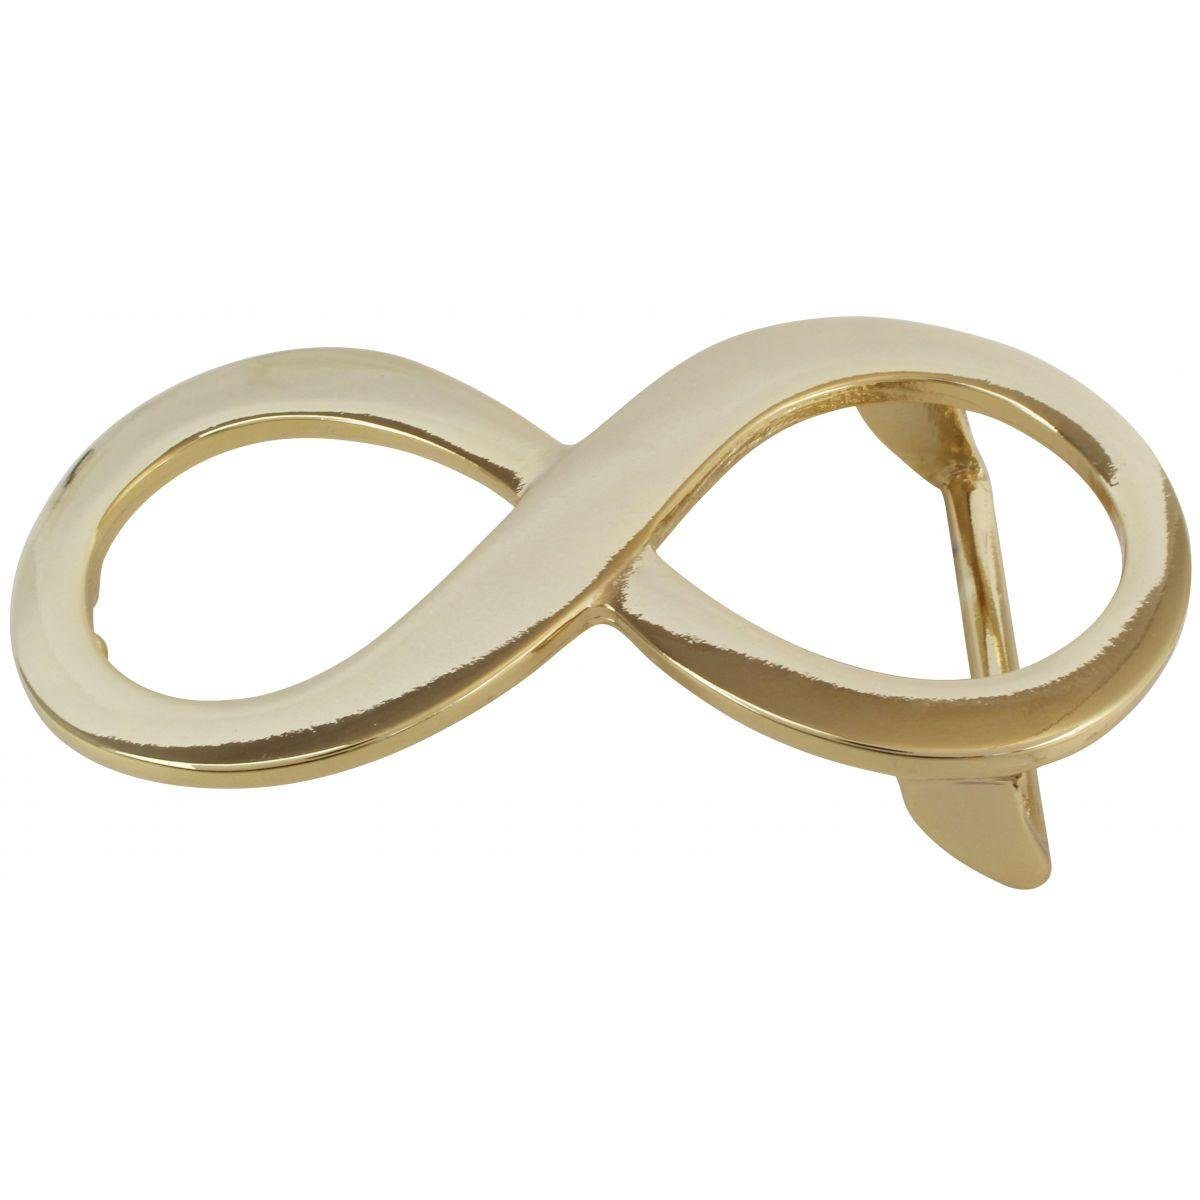 BELTINGER Gürtelschnalle Infinity 4,0 cm 40mm Gold Gürtel - Buckle Wechselschließe - Glänzend Gürtelschließe